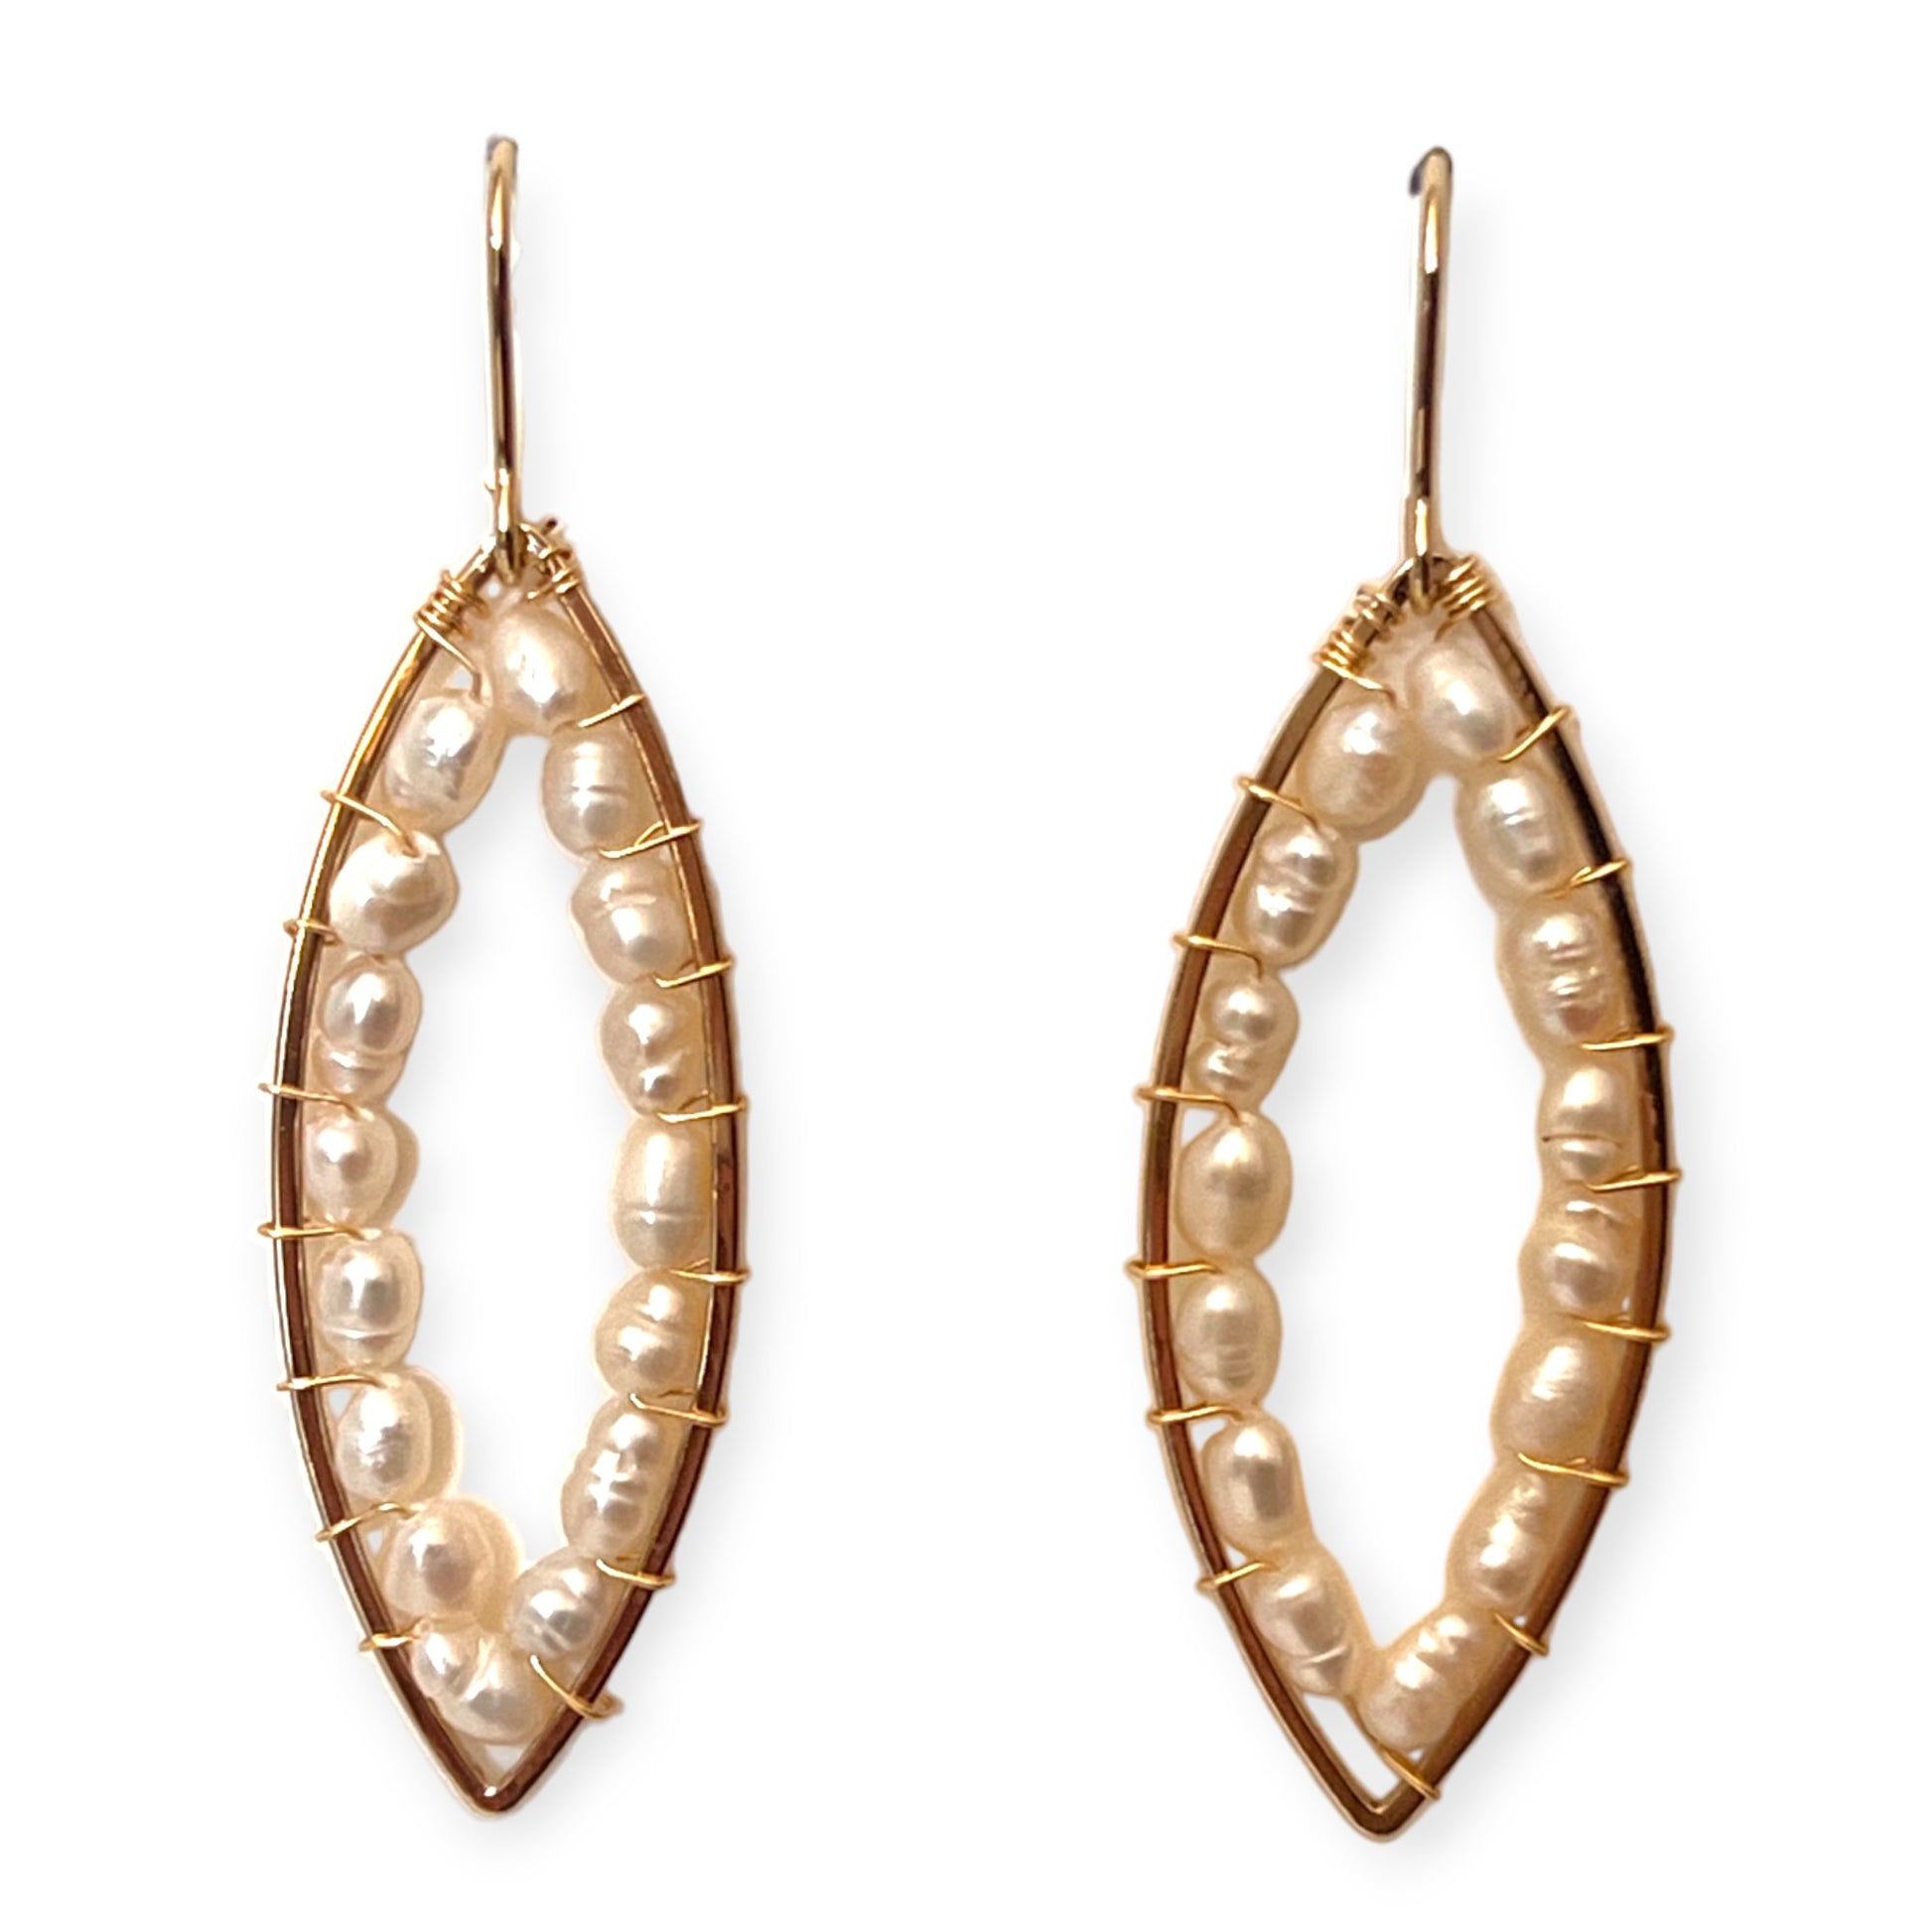 Oval shaped freshwater pearl earrings - Sundara Joon